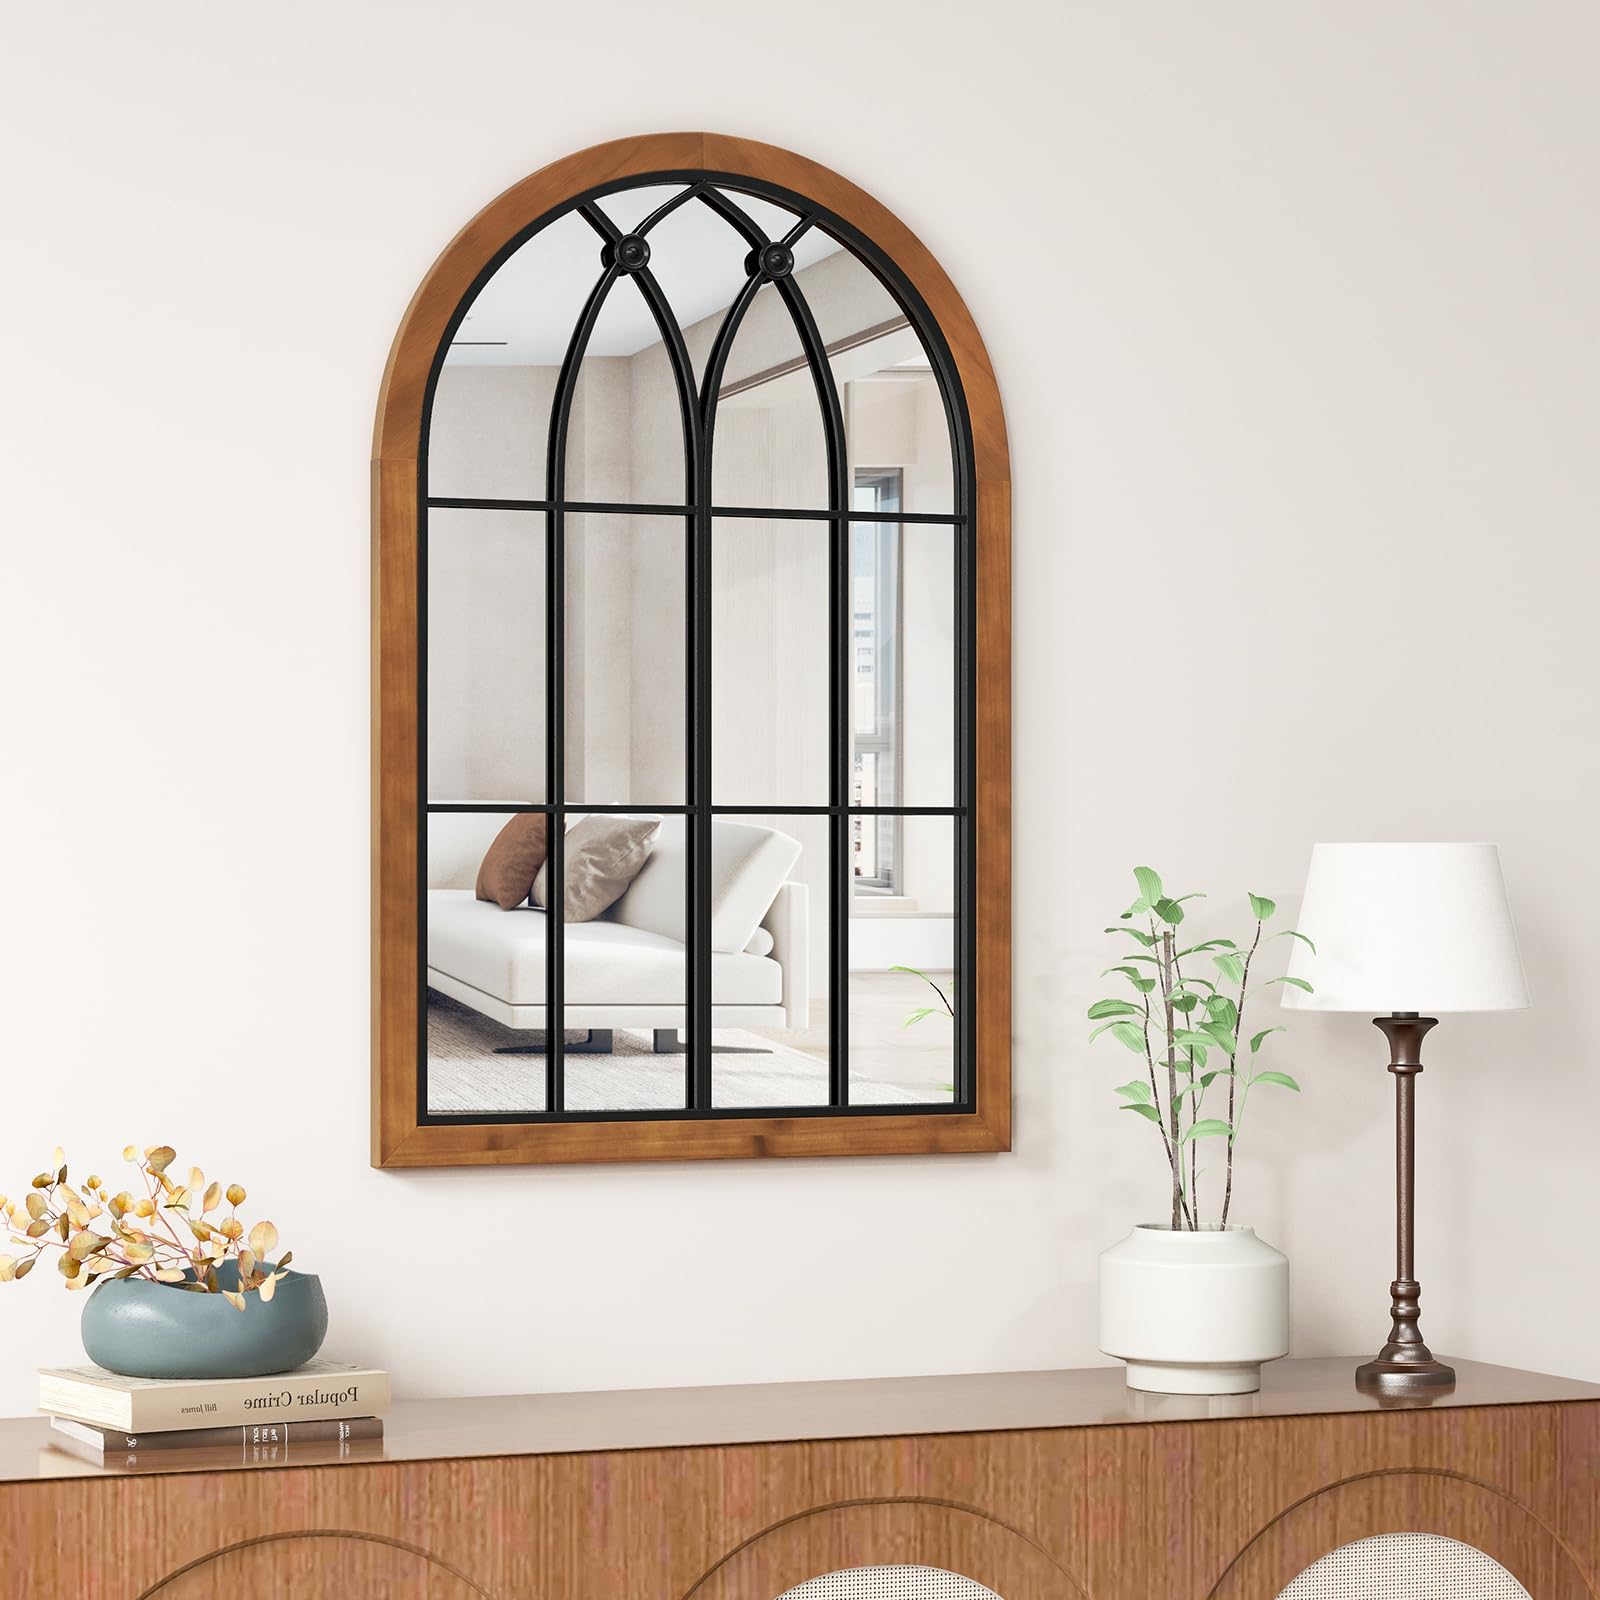 CHARMAID Arched Window Wall Mirror, 36''L x 24''W Farmhouse Accent Mirror